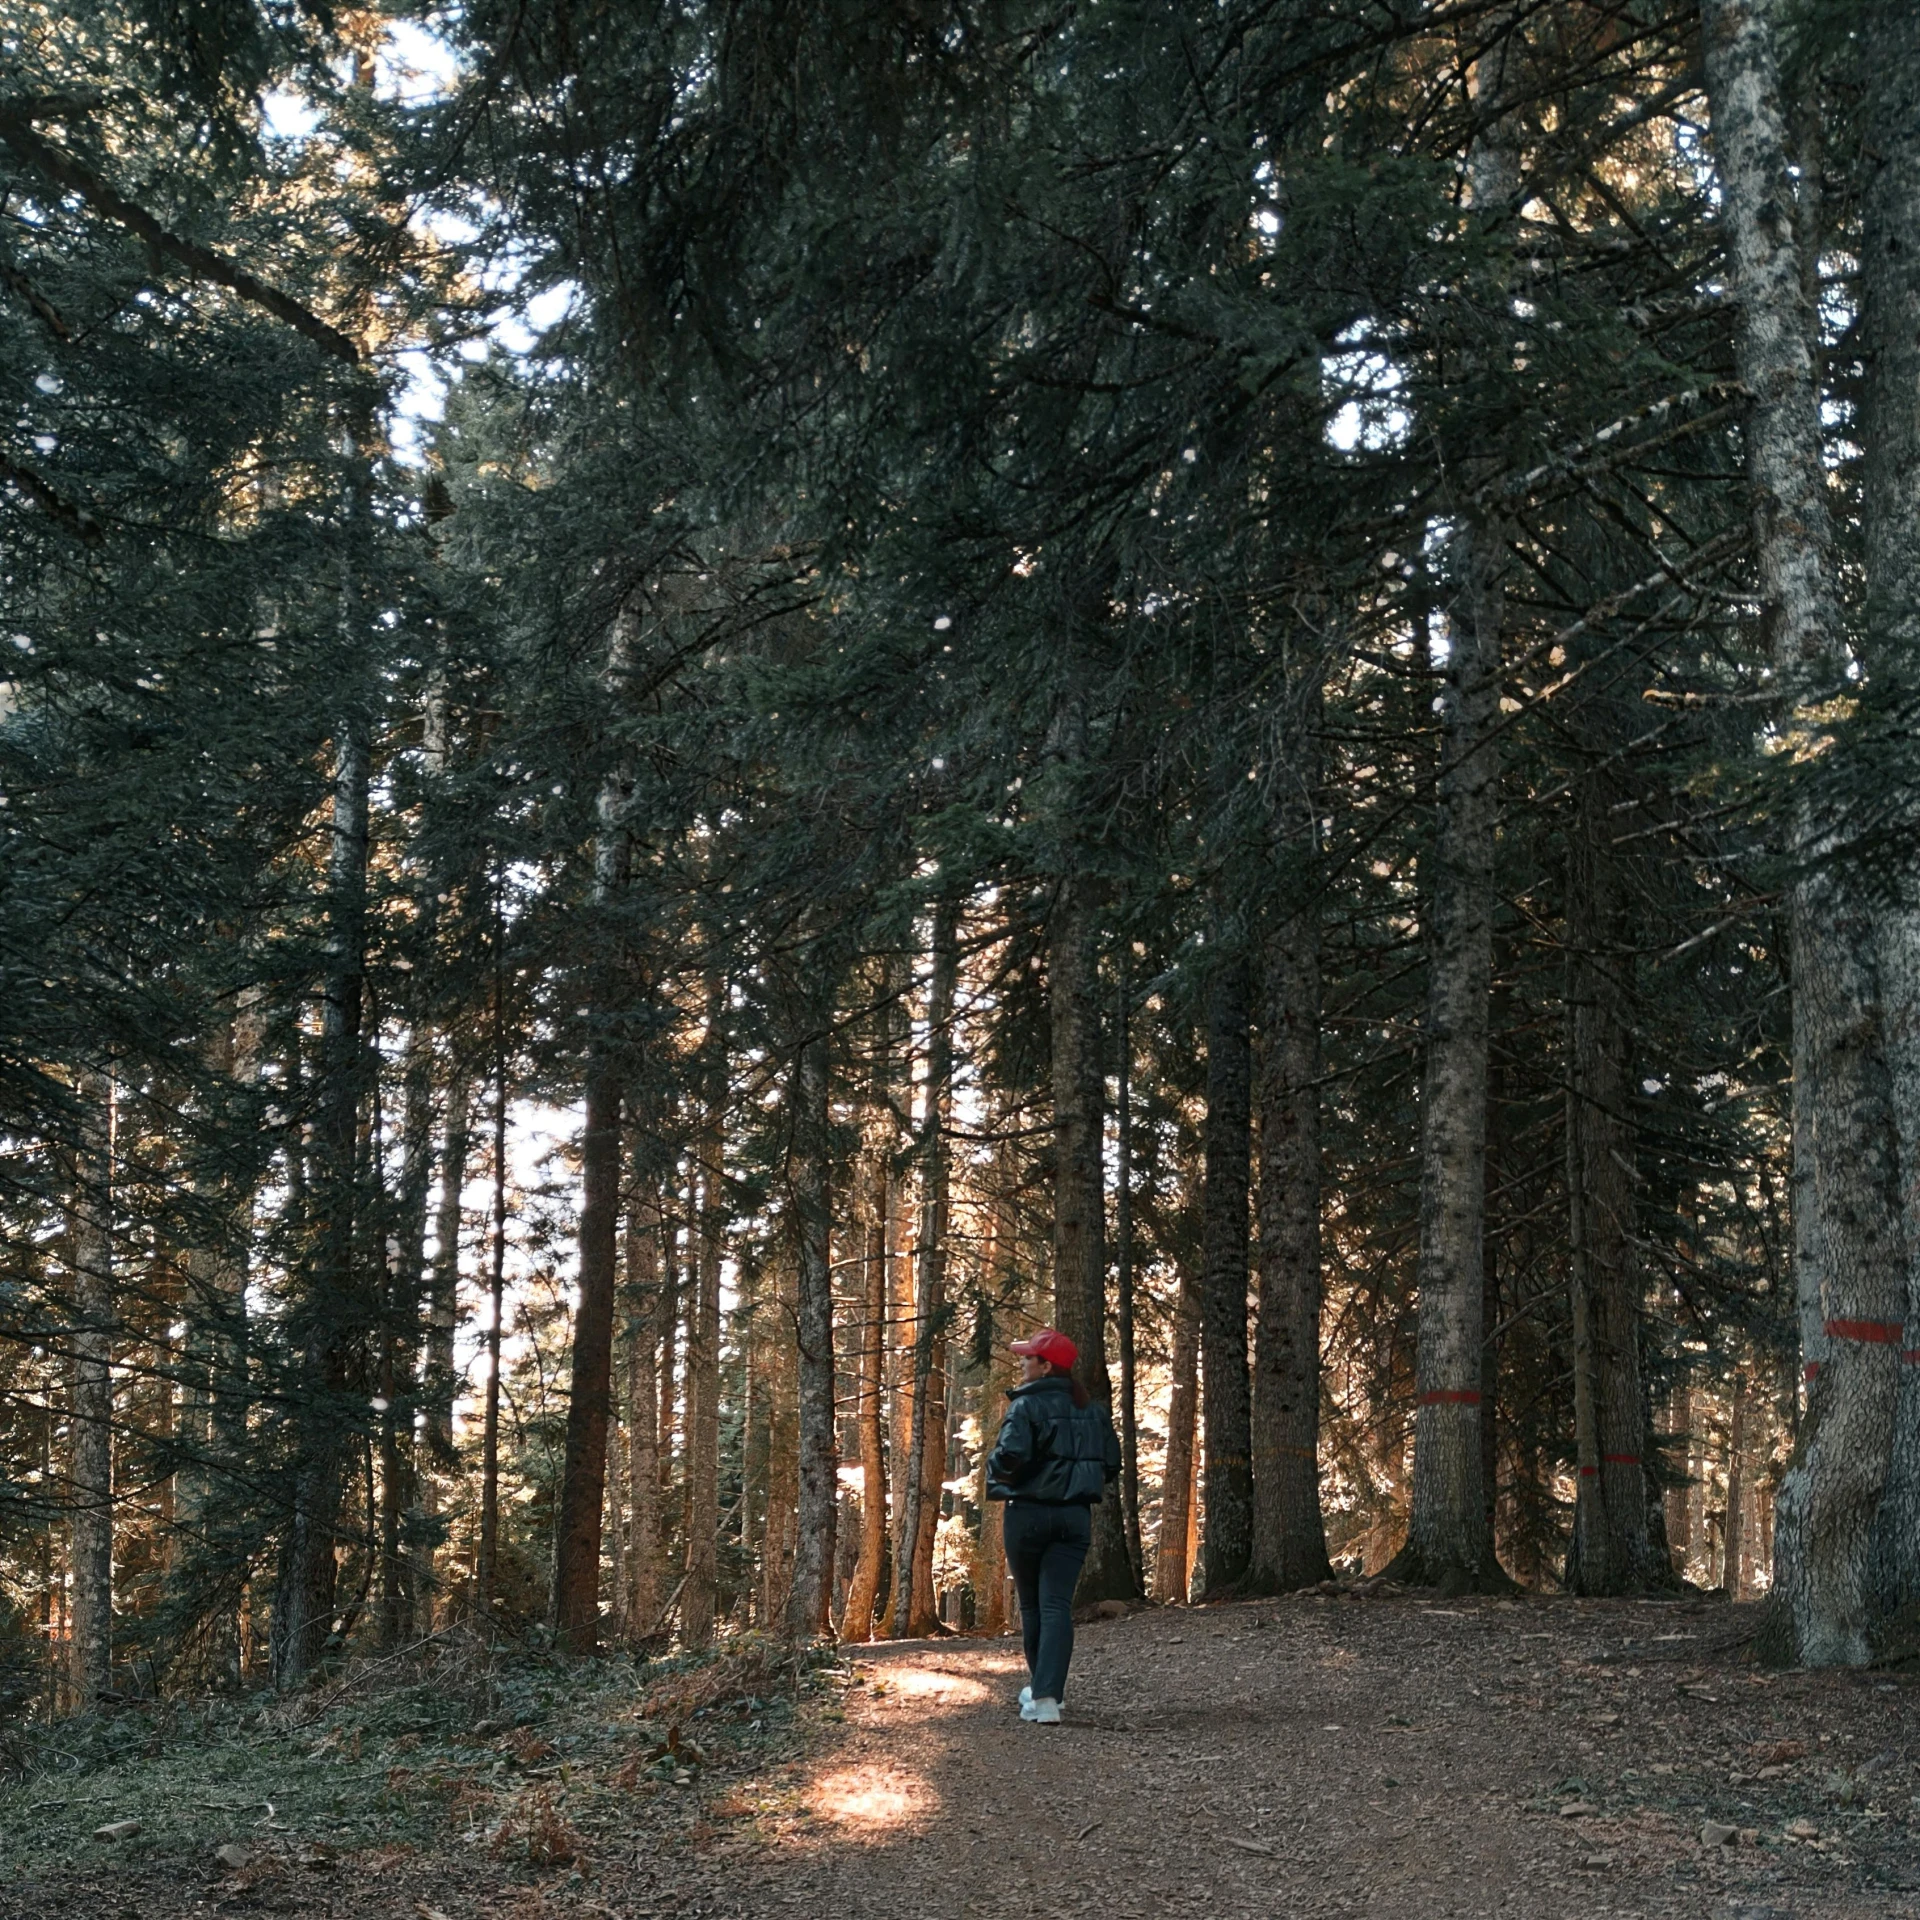 man walking down dirt path through a forest area